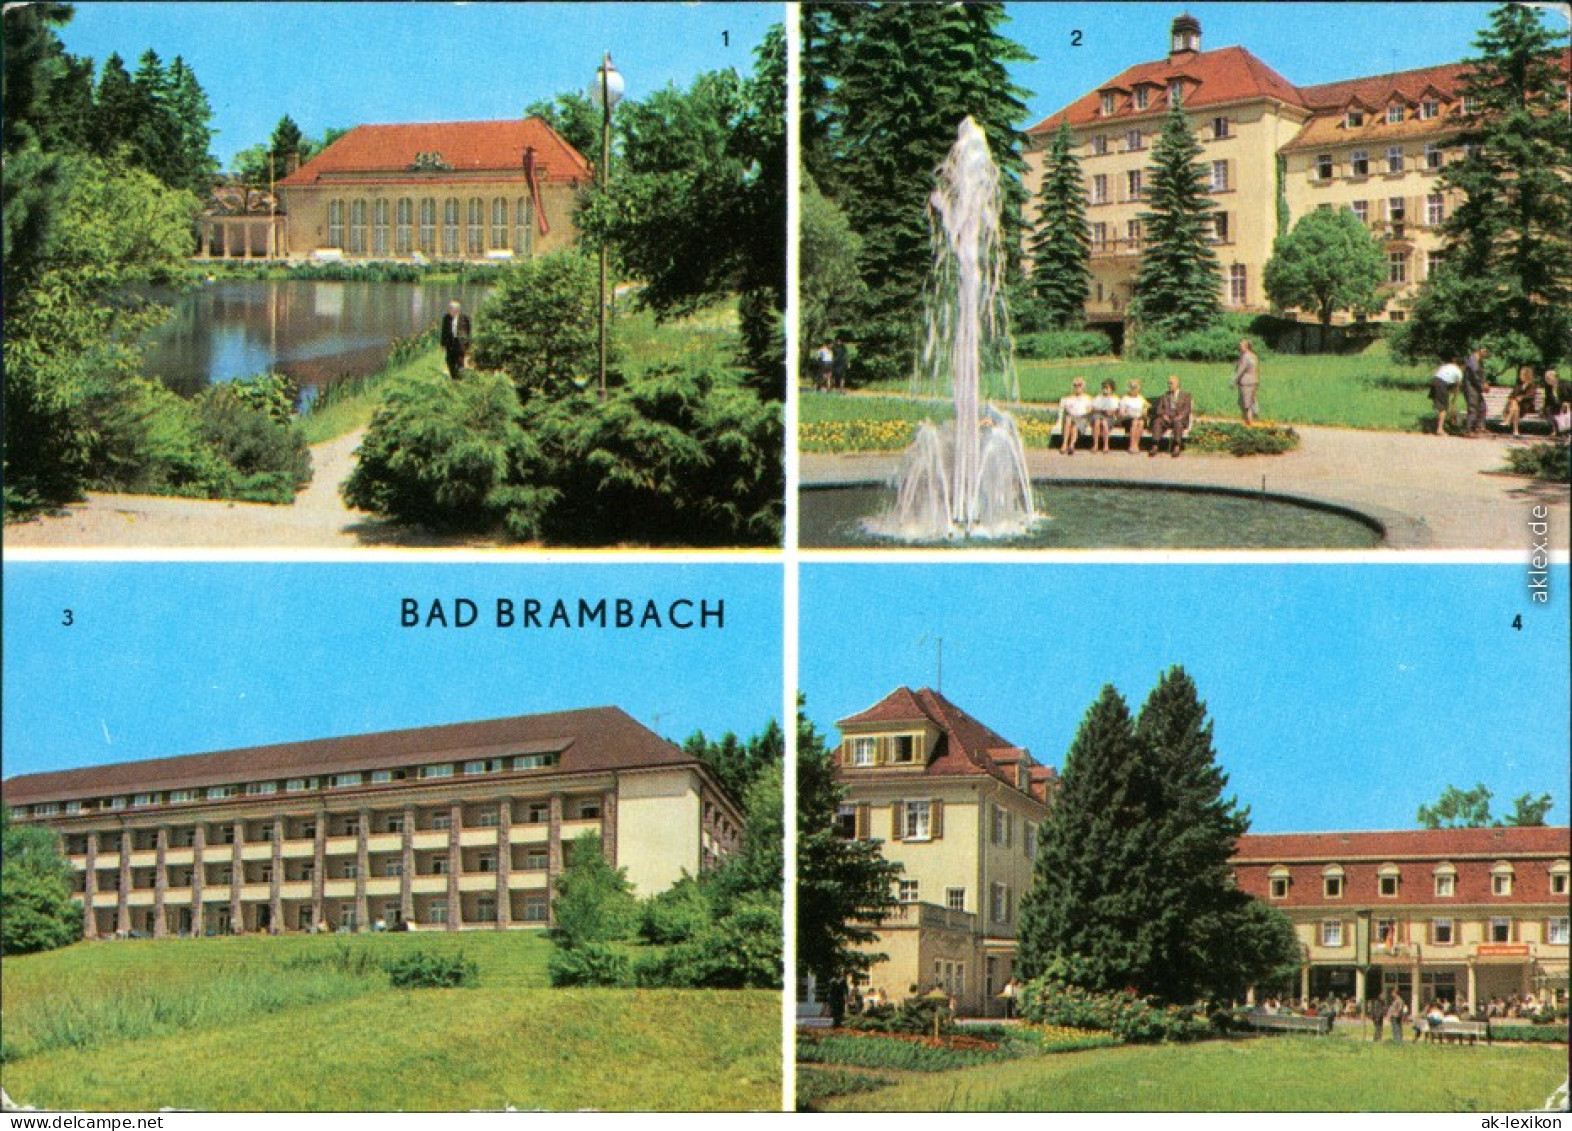 Bad Brambach Festhalle, Joliot-Curie-Haus, Julius-Fucik-Haus, Vogtlandhaus 1974 - Bad Brambach